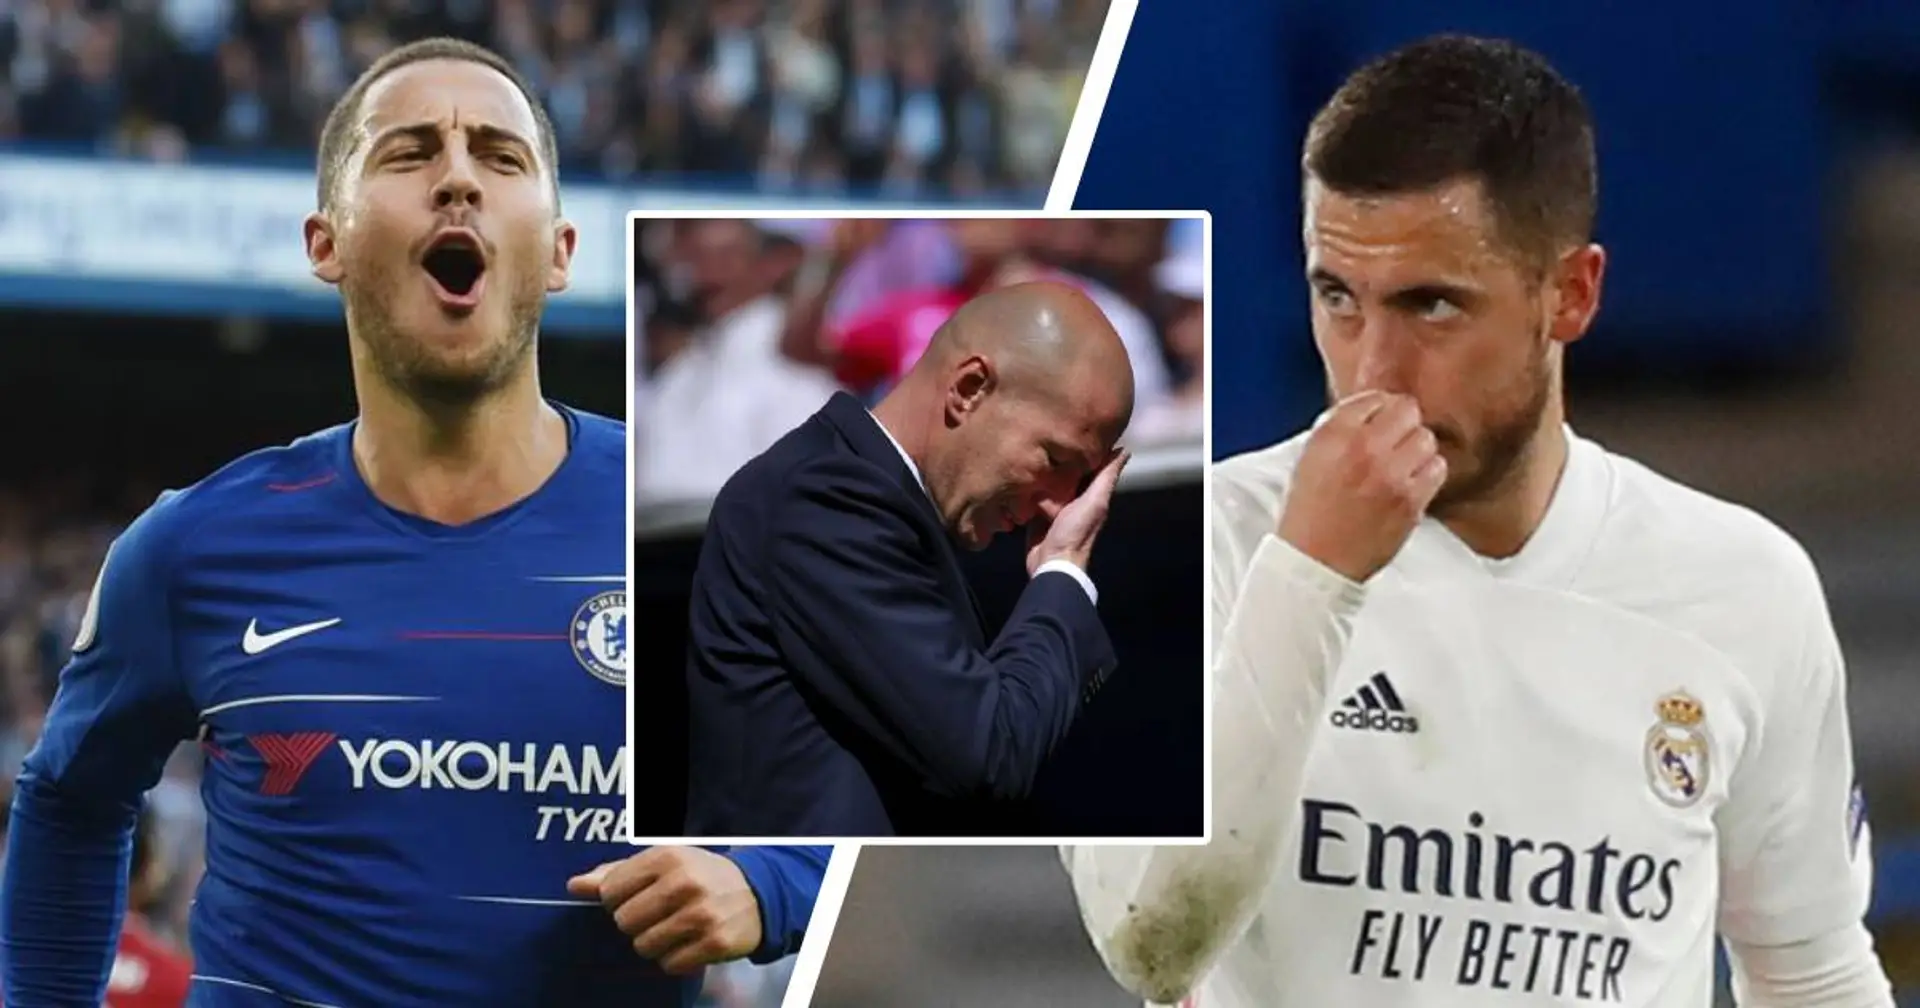 Fan names key reason behind Hazard's poor Madrid spell - it's not the injuries